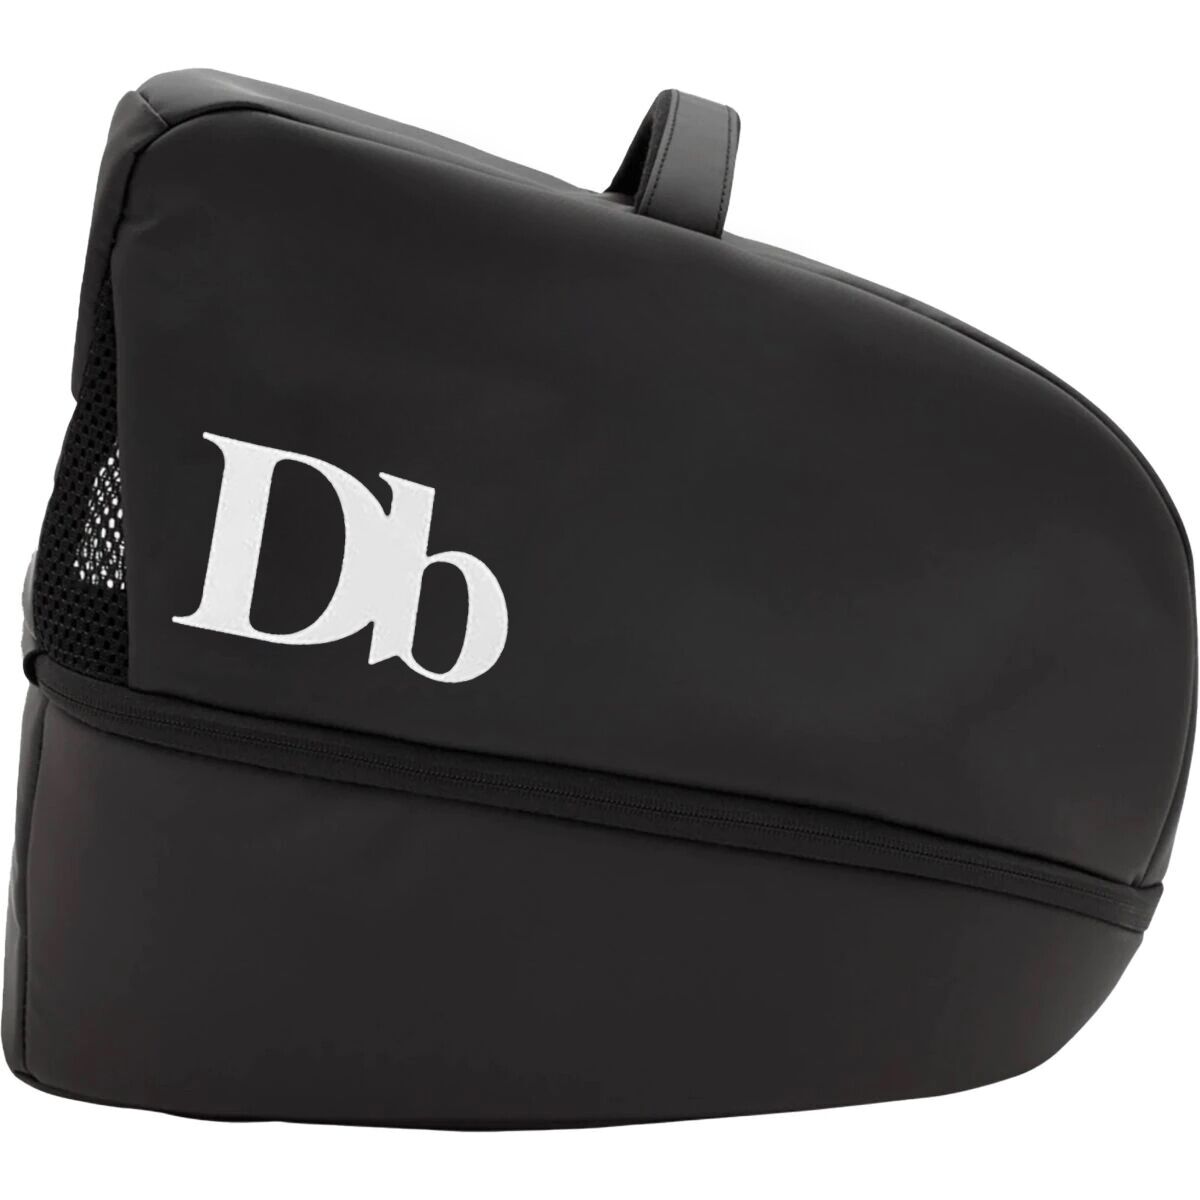 Db The Vaxla Helmet Bag